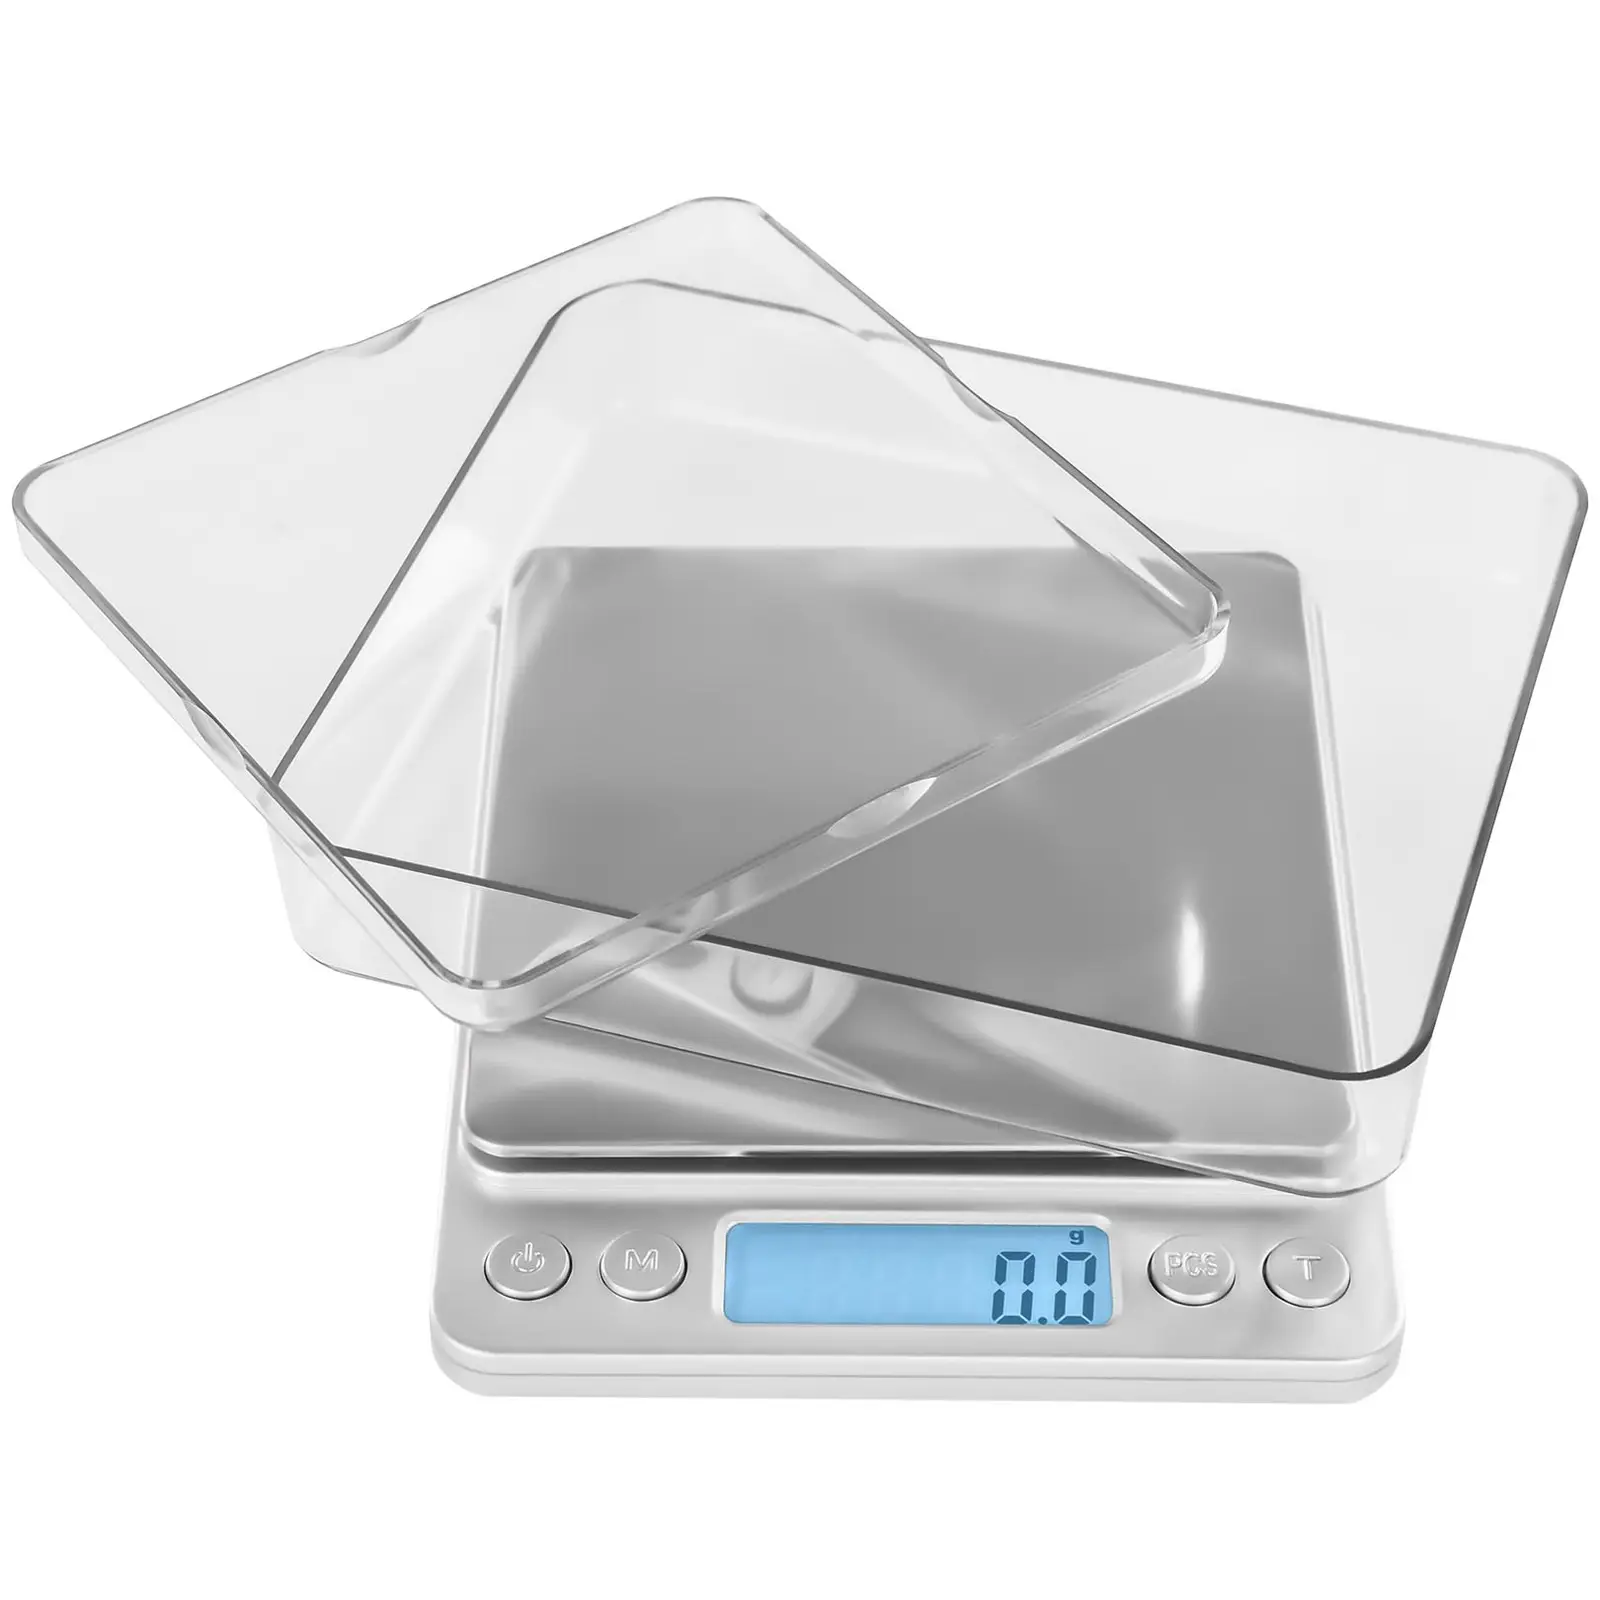 Digitale Tischwaage - 3 kg / 0,1 g - Basic